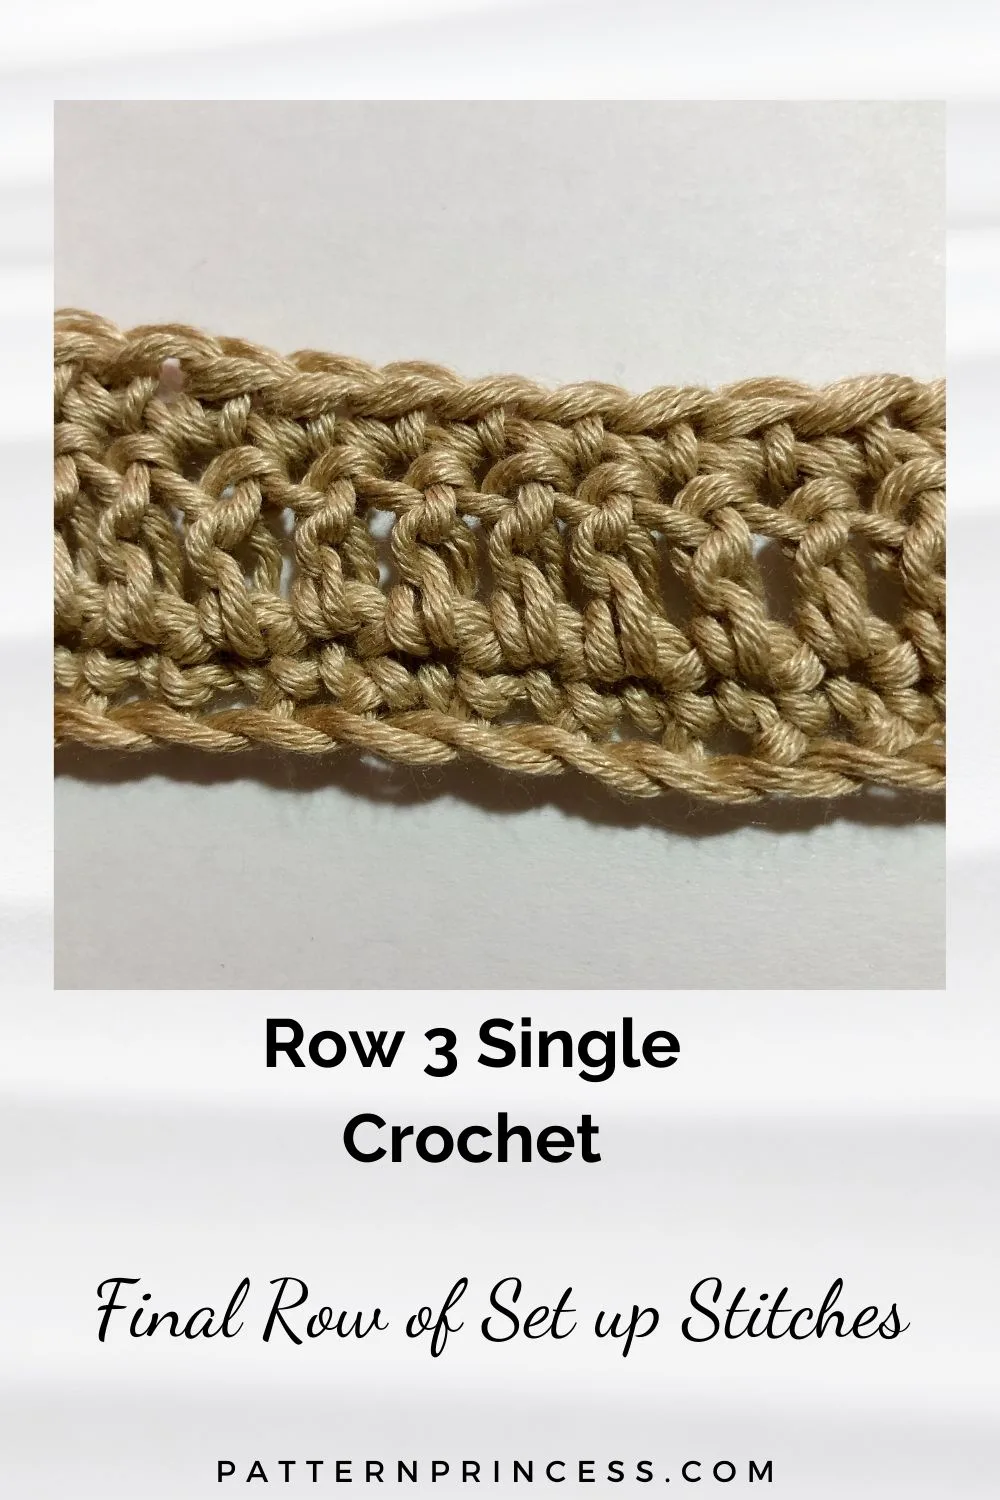 Row 3 Single Crochet